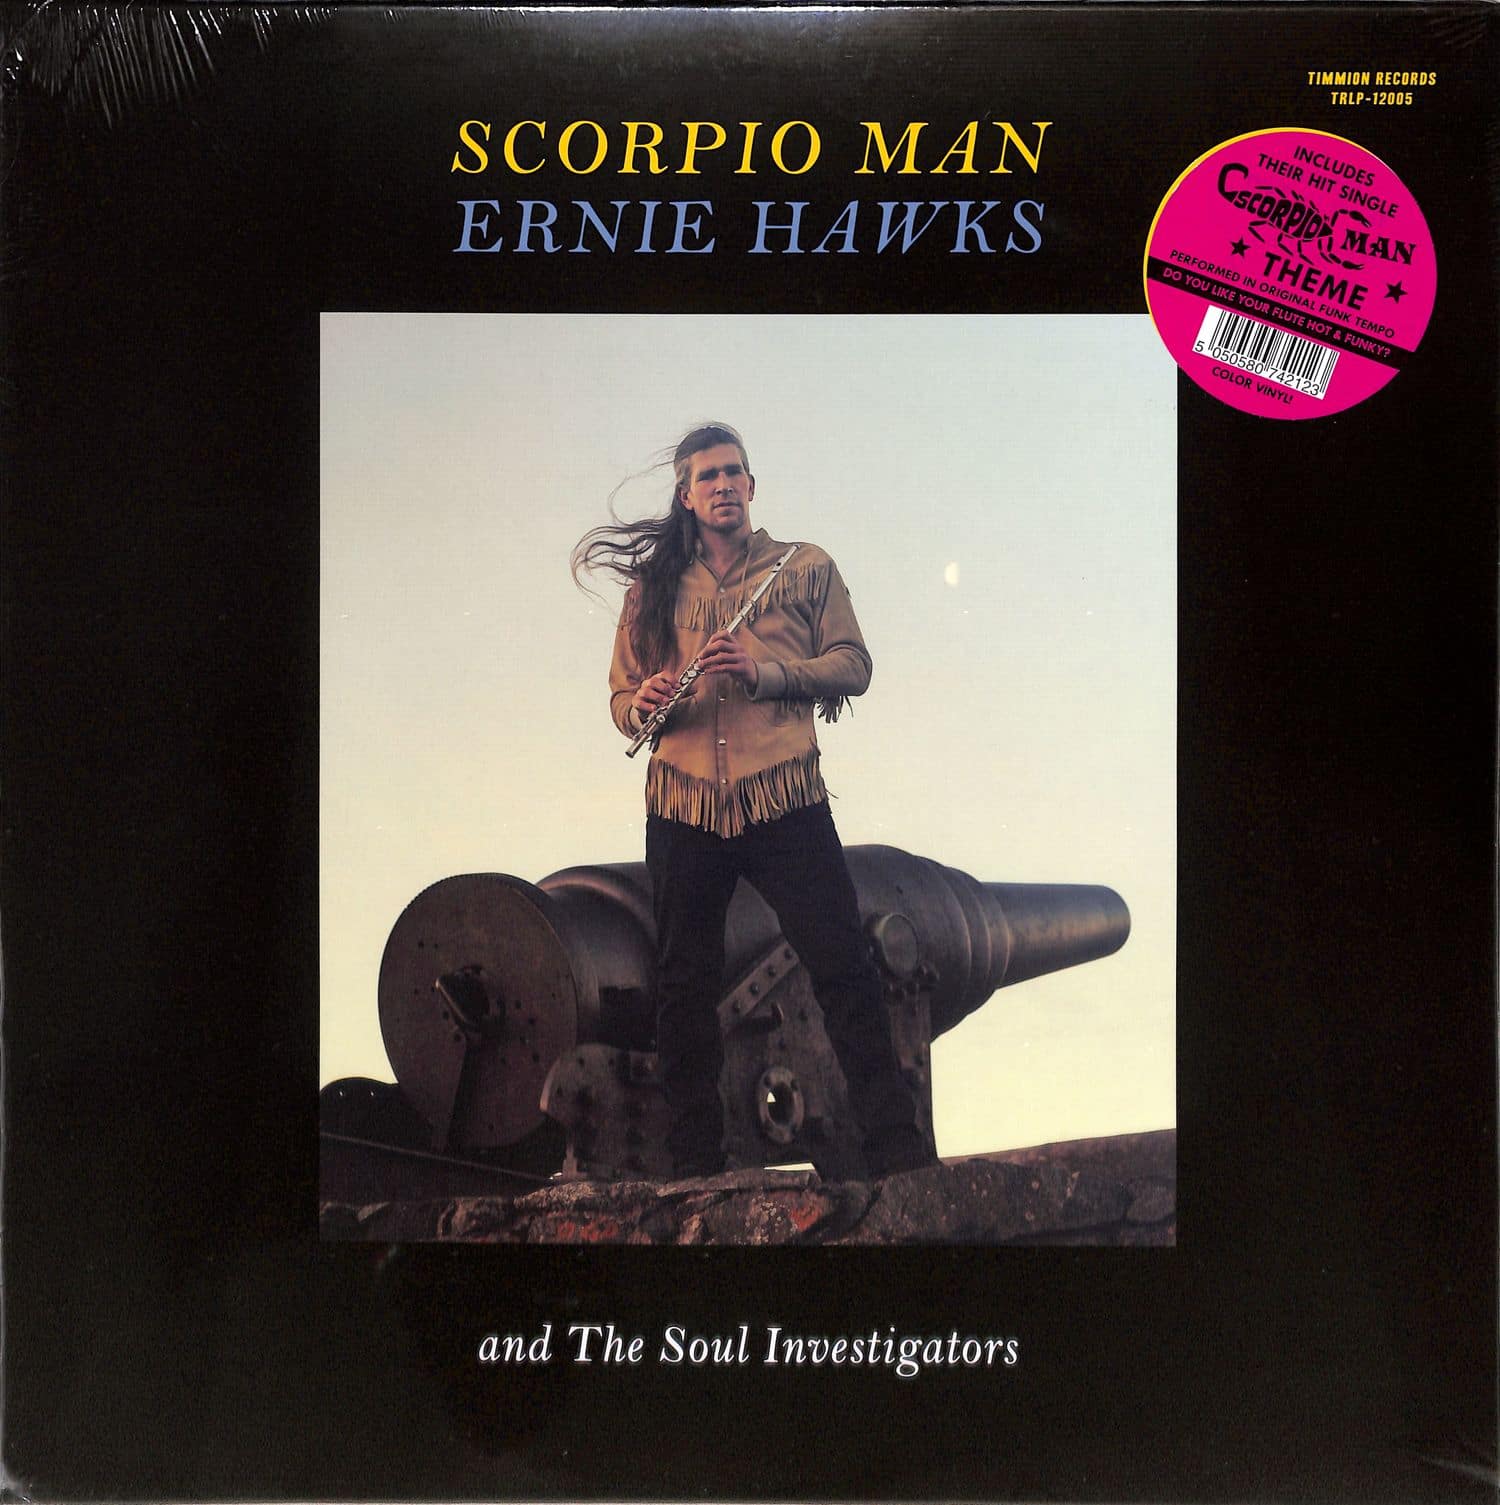 Ernie Hawks & The Soul Investigators - SCORPIO MAN 